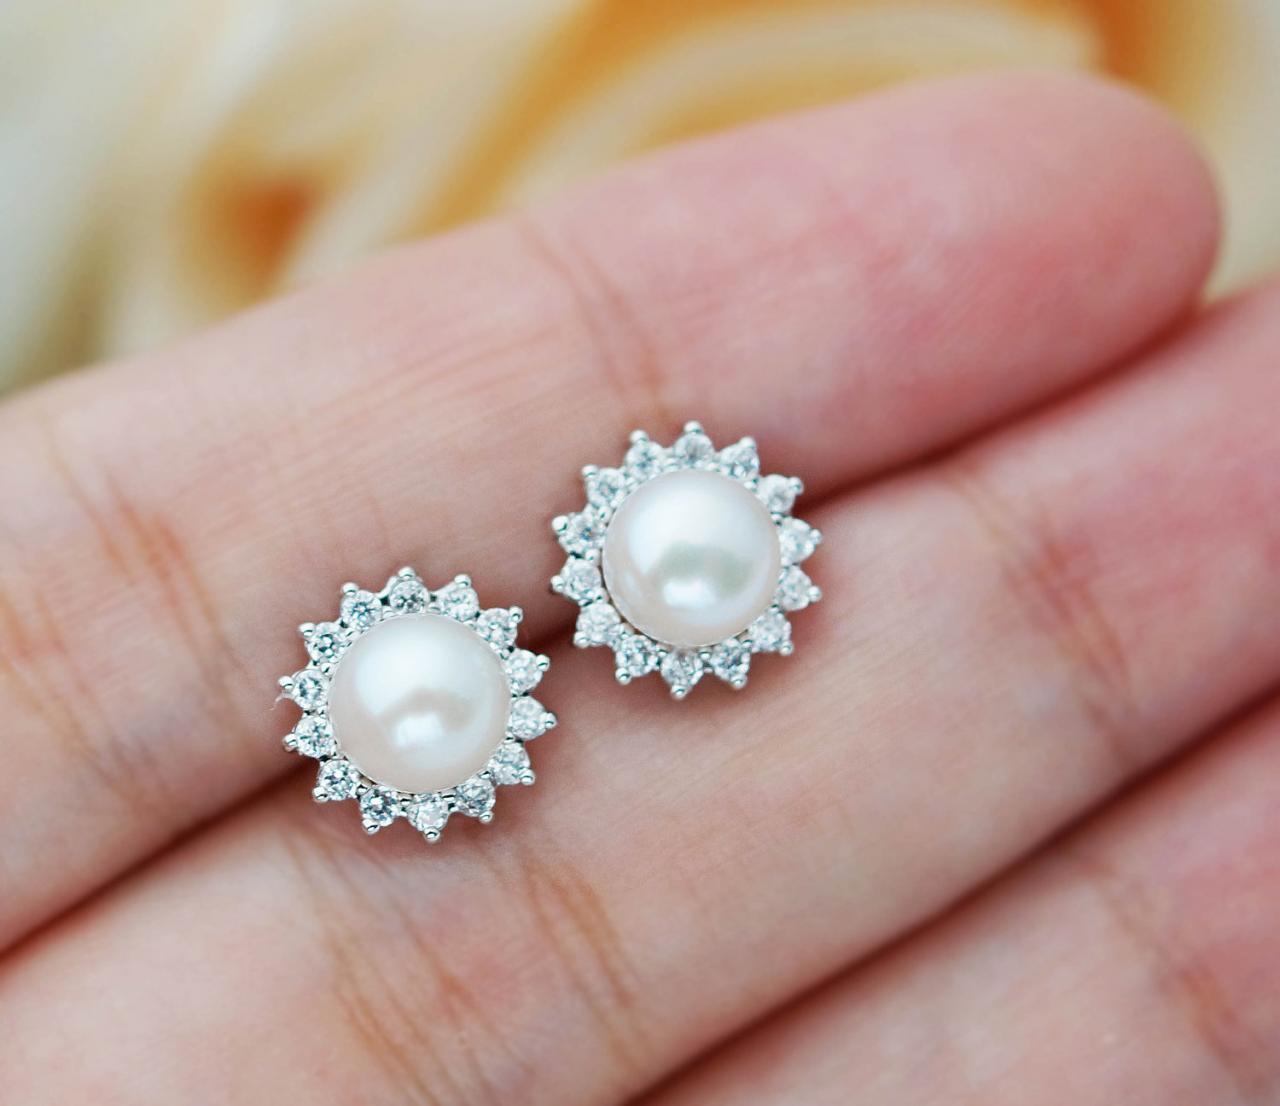 Wedding Jewelry Bridal Earrings Bridesmaid Earrings Cubic Zirconia Ear Posts With White Shell Based Pearl Earrings Pearl Jewelry